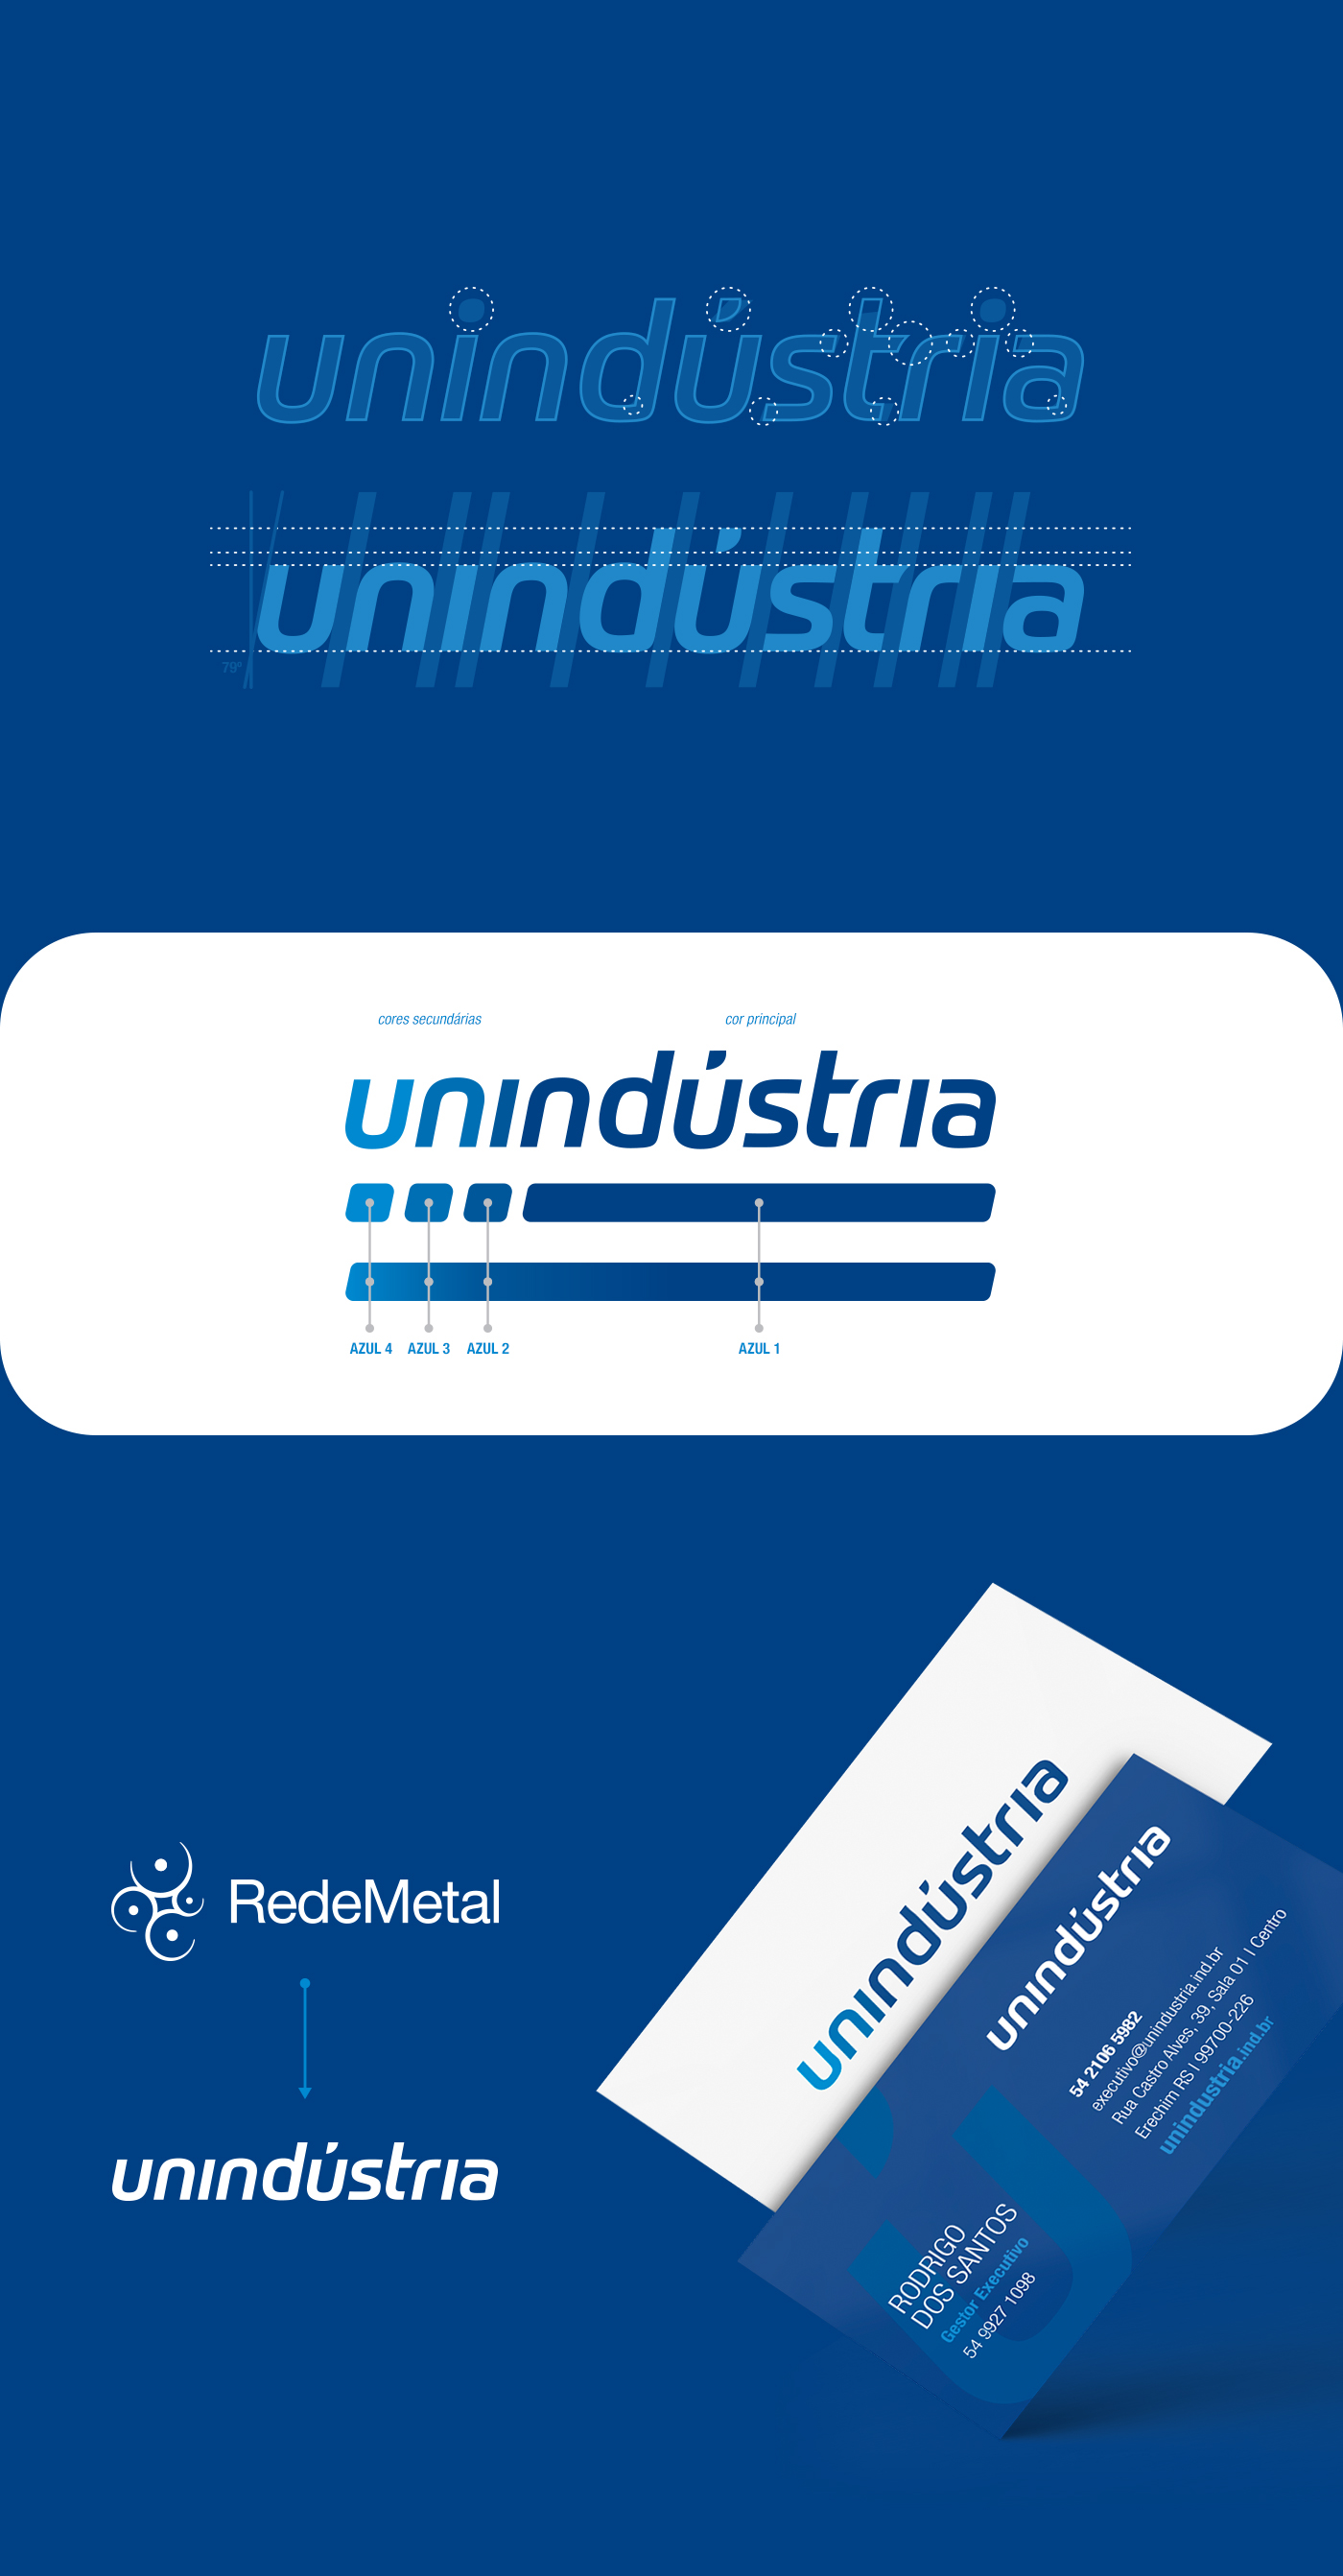 industria industry metal metallurgic textil transportation business corporate identity logo